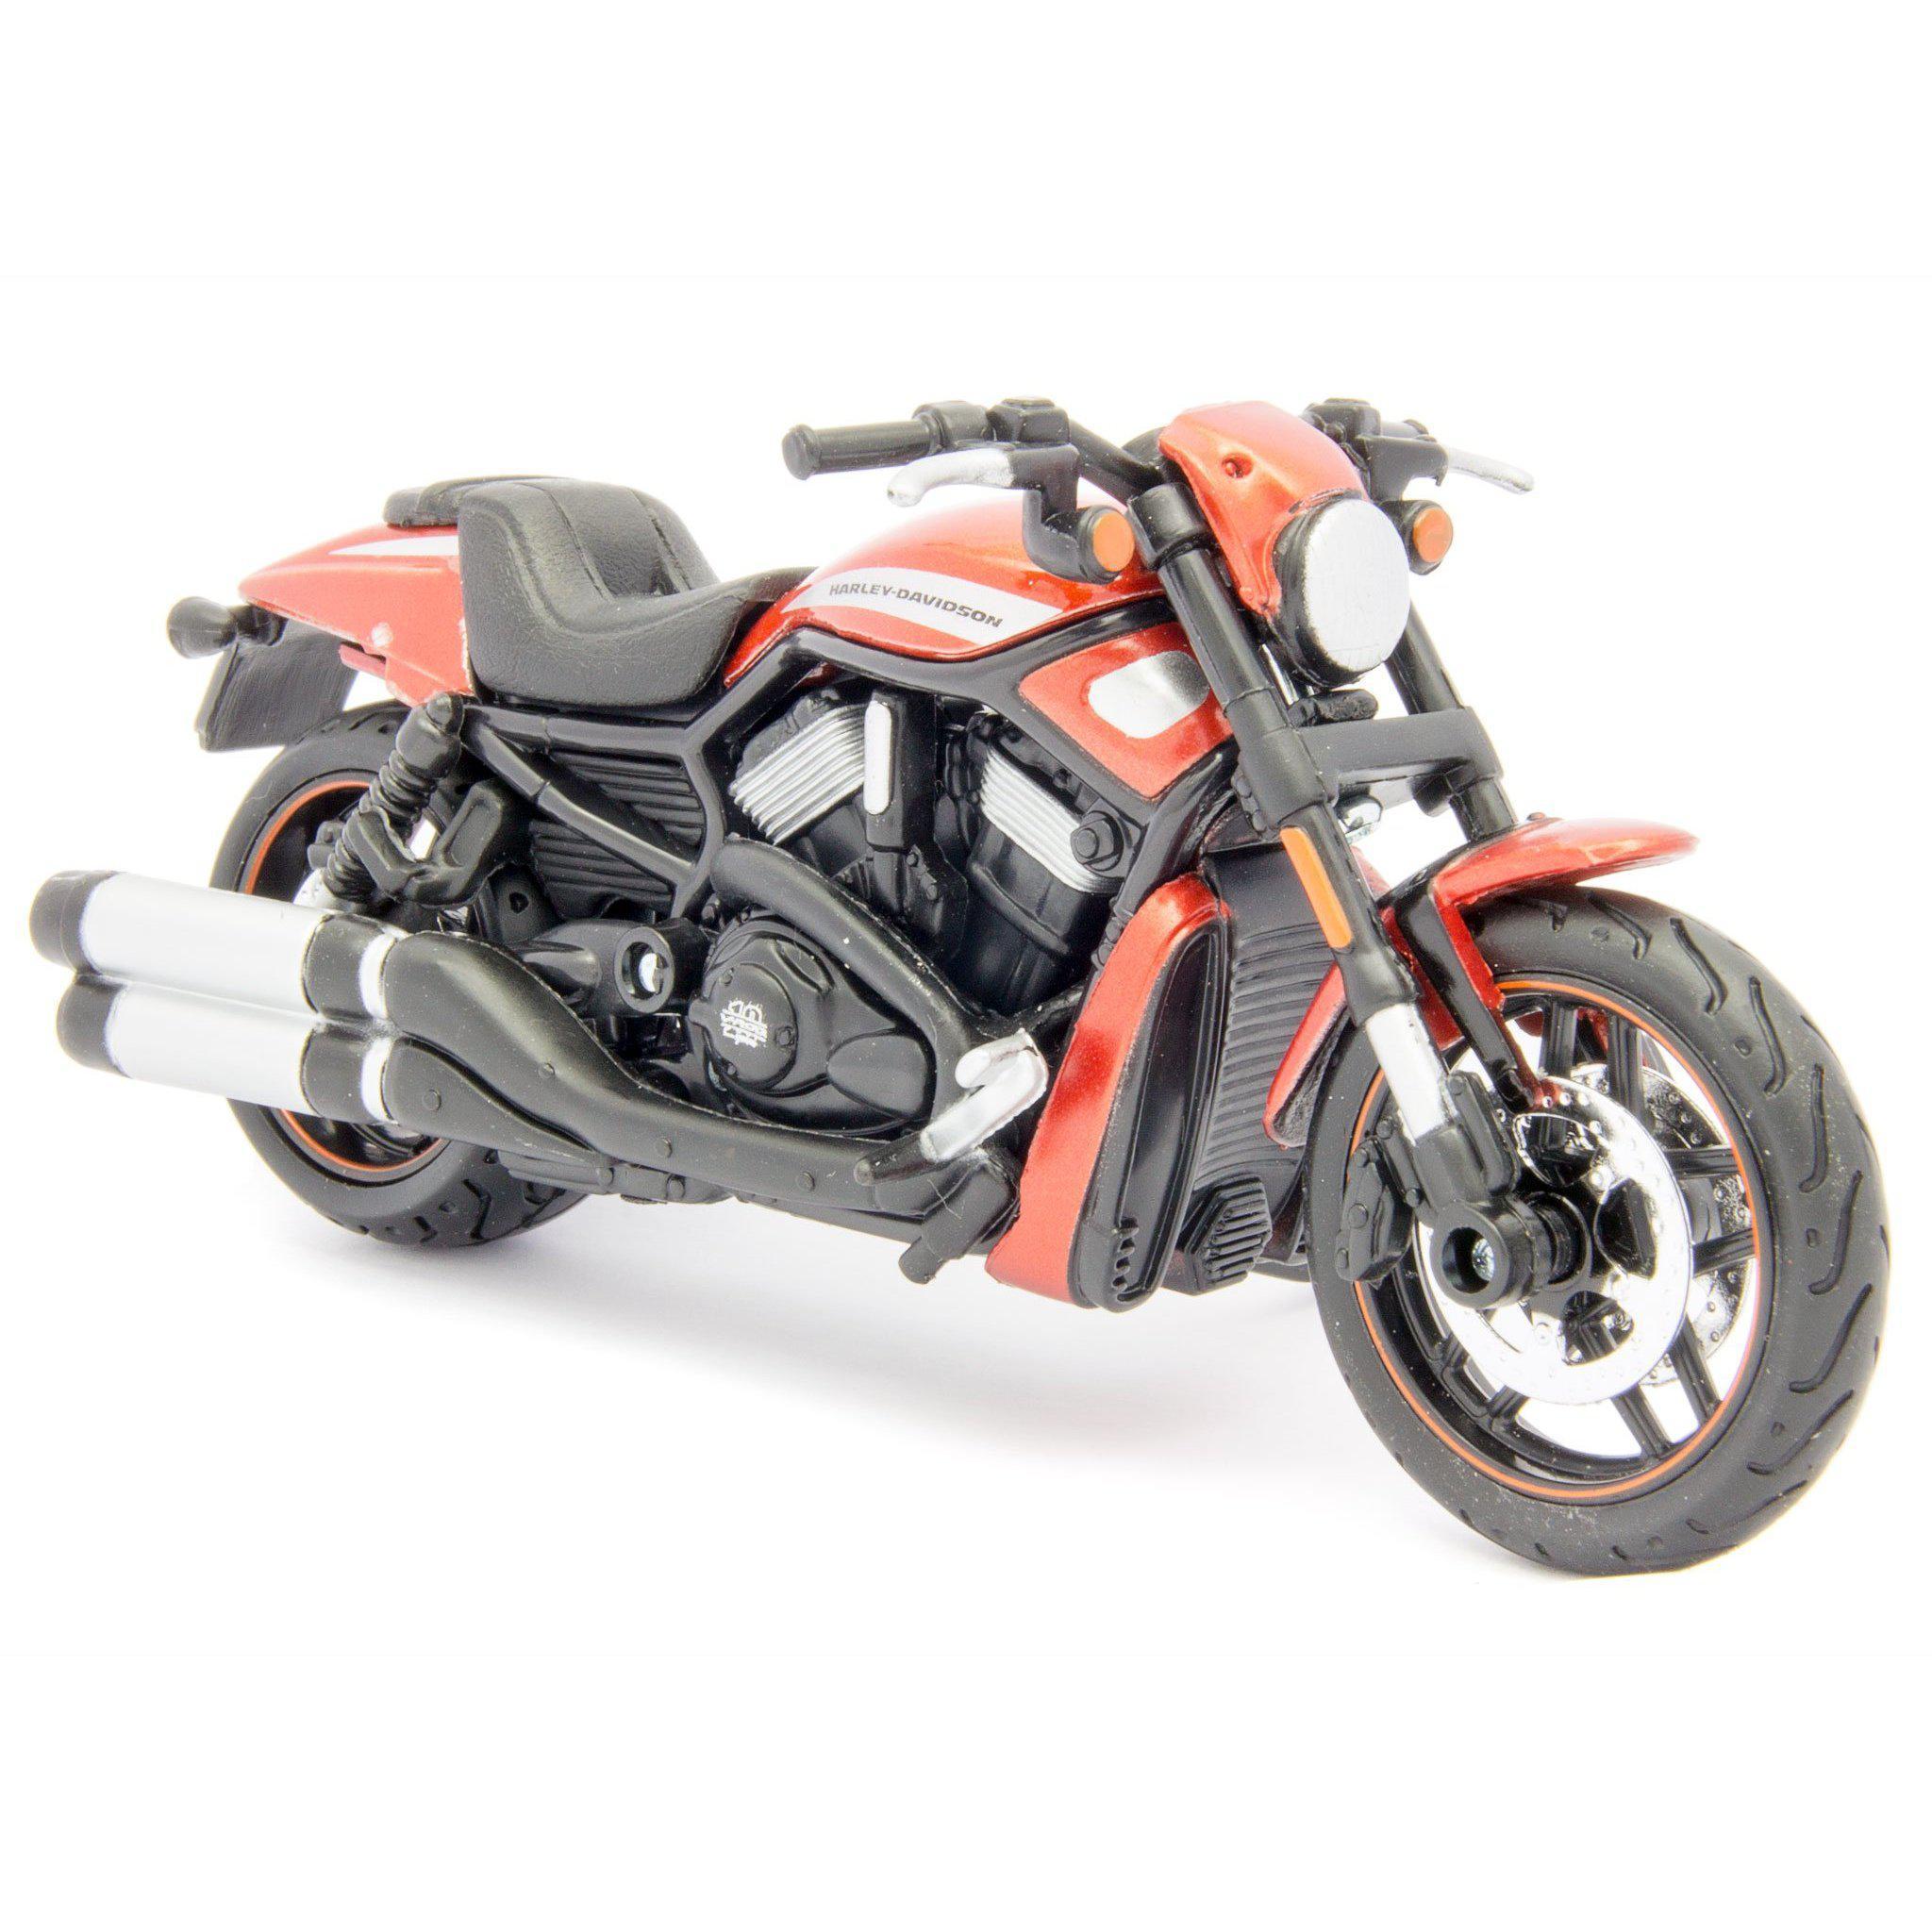 Harley-Davidson VRSCDX Night Rod Special Diecast Model Motorcycle 2012 red - 1:18 scale-Maisto-Diecast Model Centre